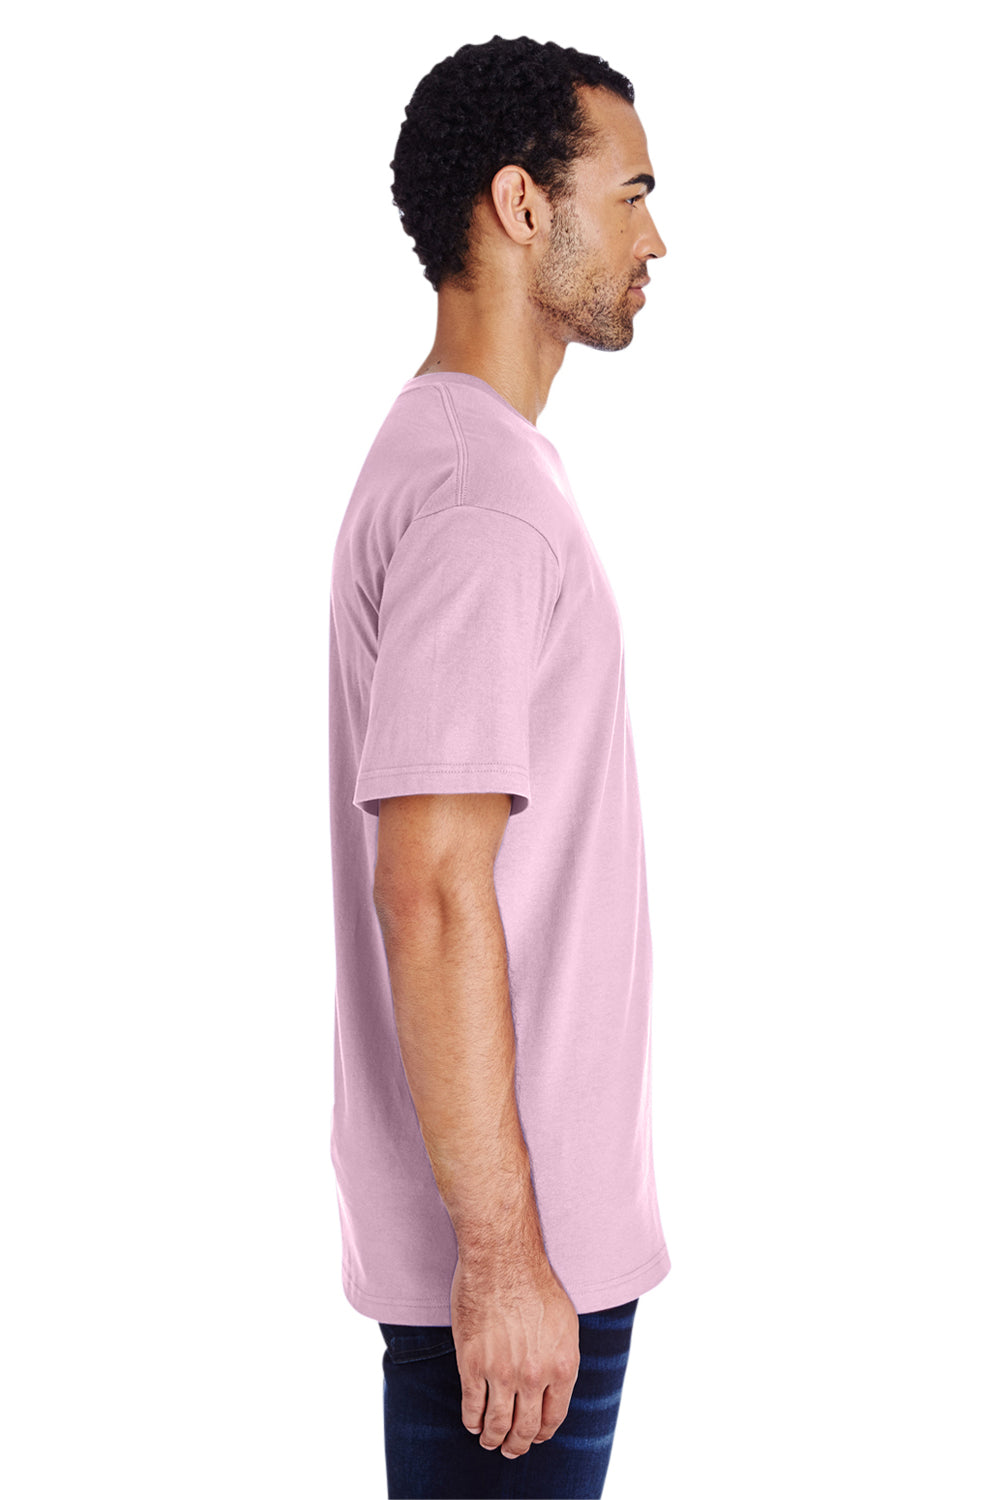 Gildan H000 Mens Hammer Short Sleeve Crewneck T-Shirt Light Pink Side